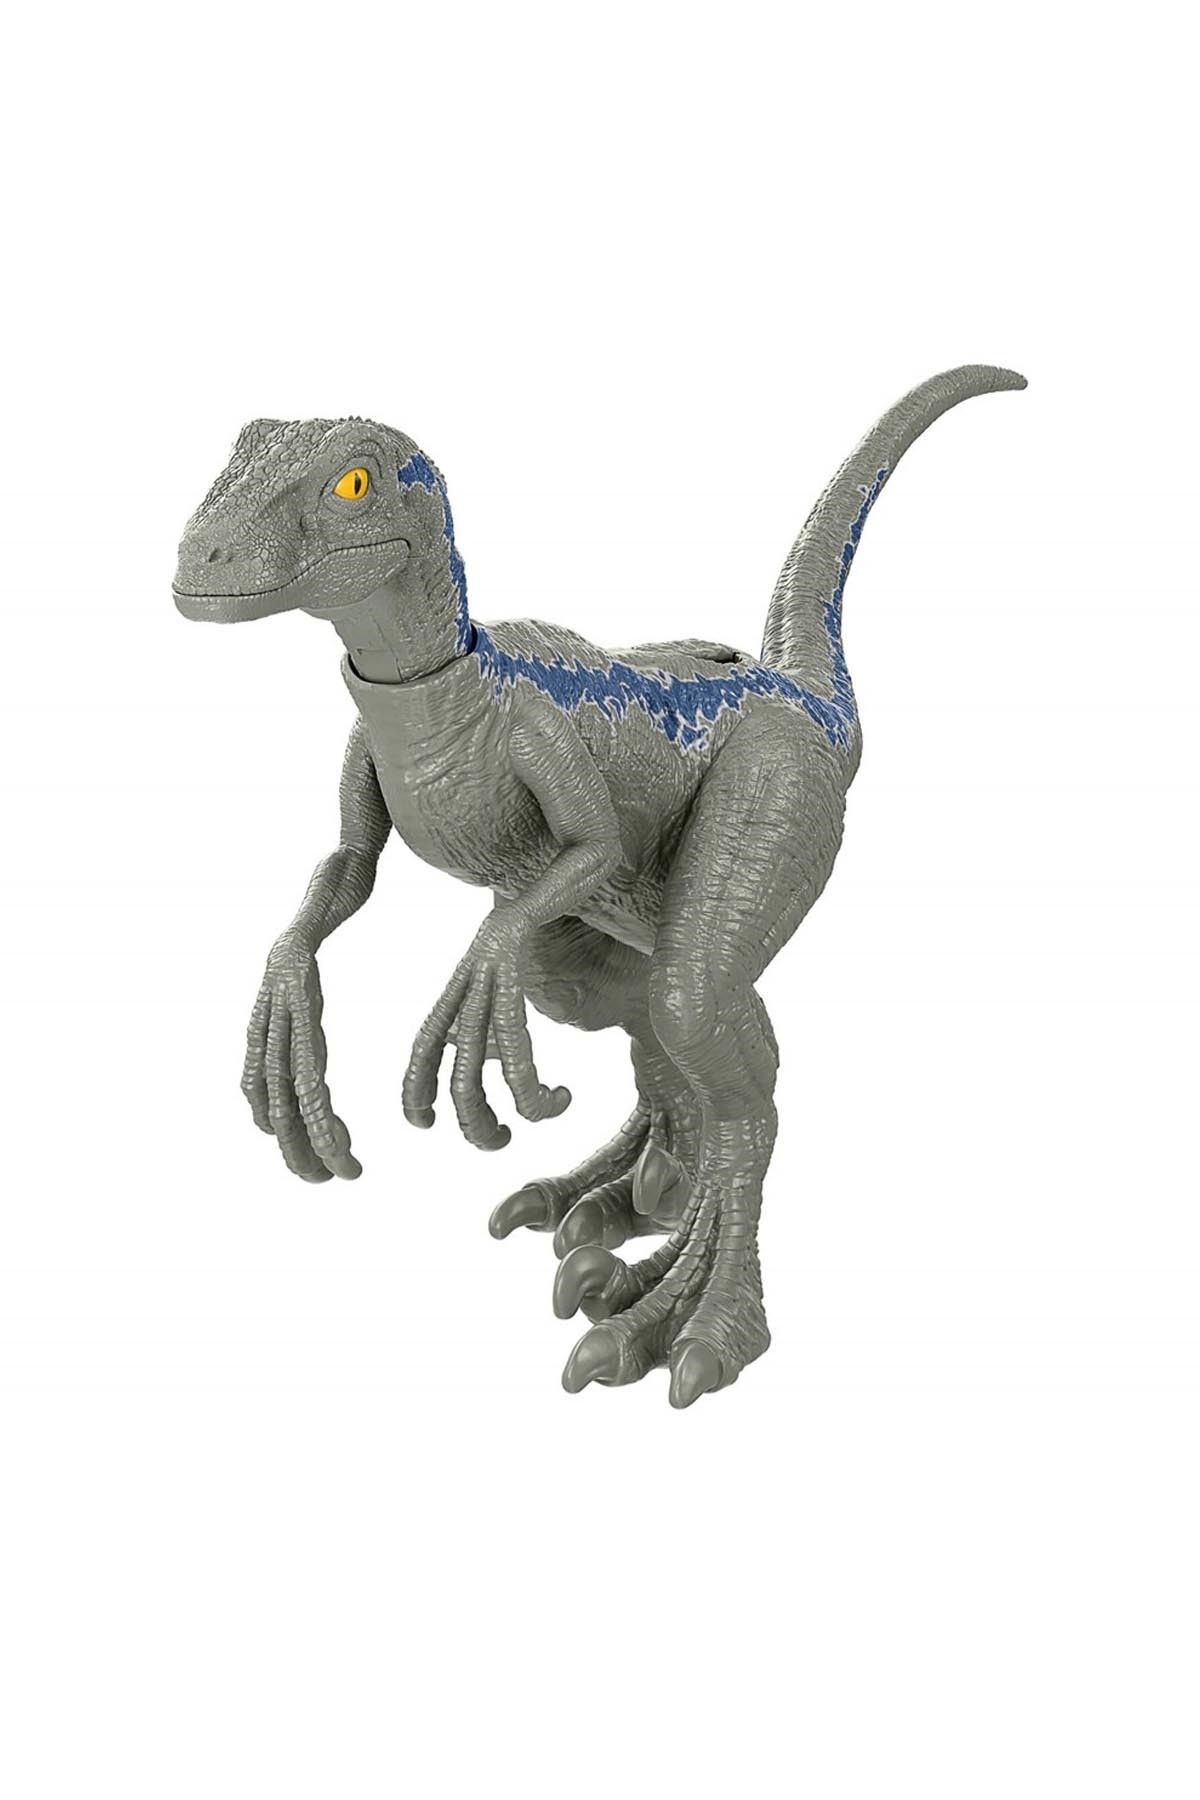 Jurassic World Tehlikeli Dinozor Figürü GWD01